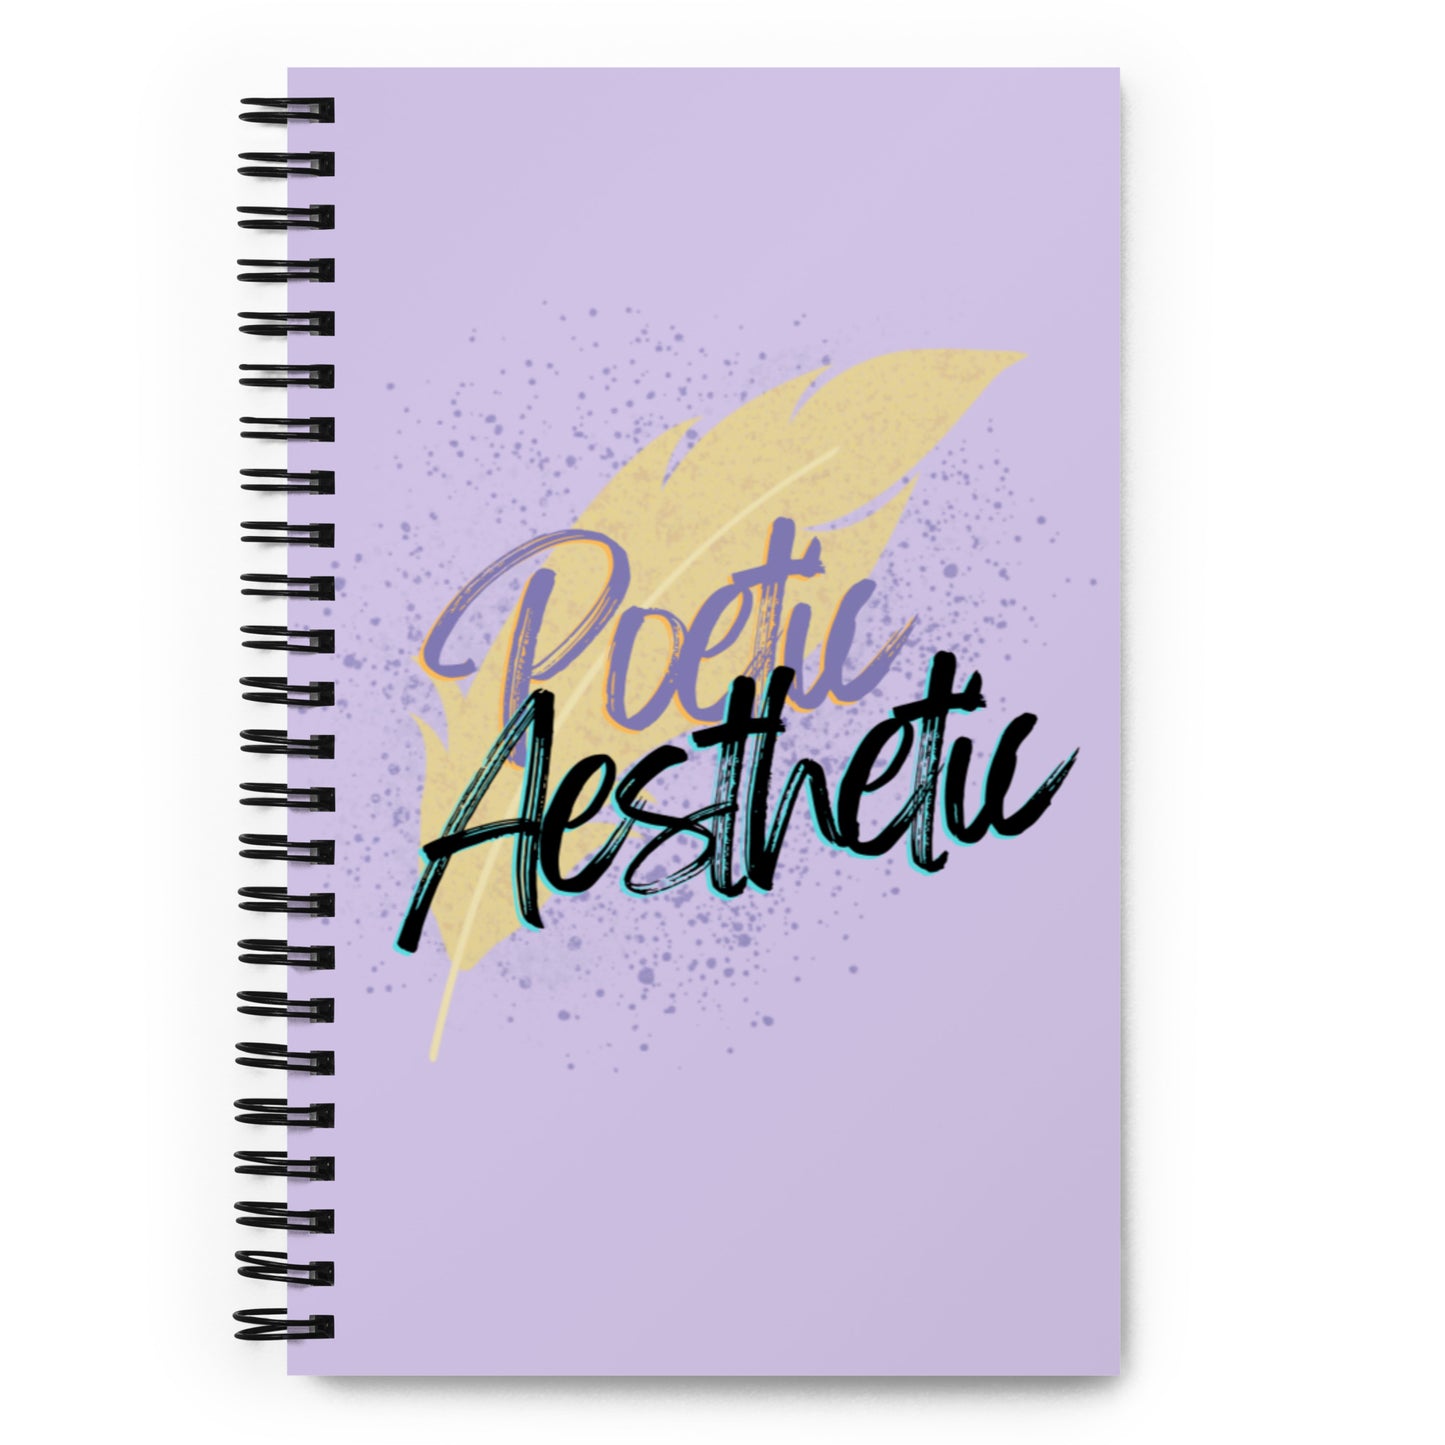 Poetic Aesthetic Spiral Notebook